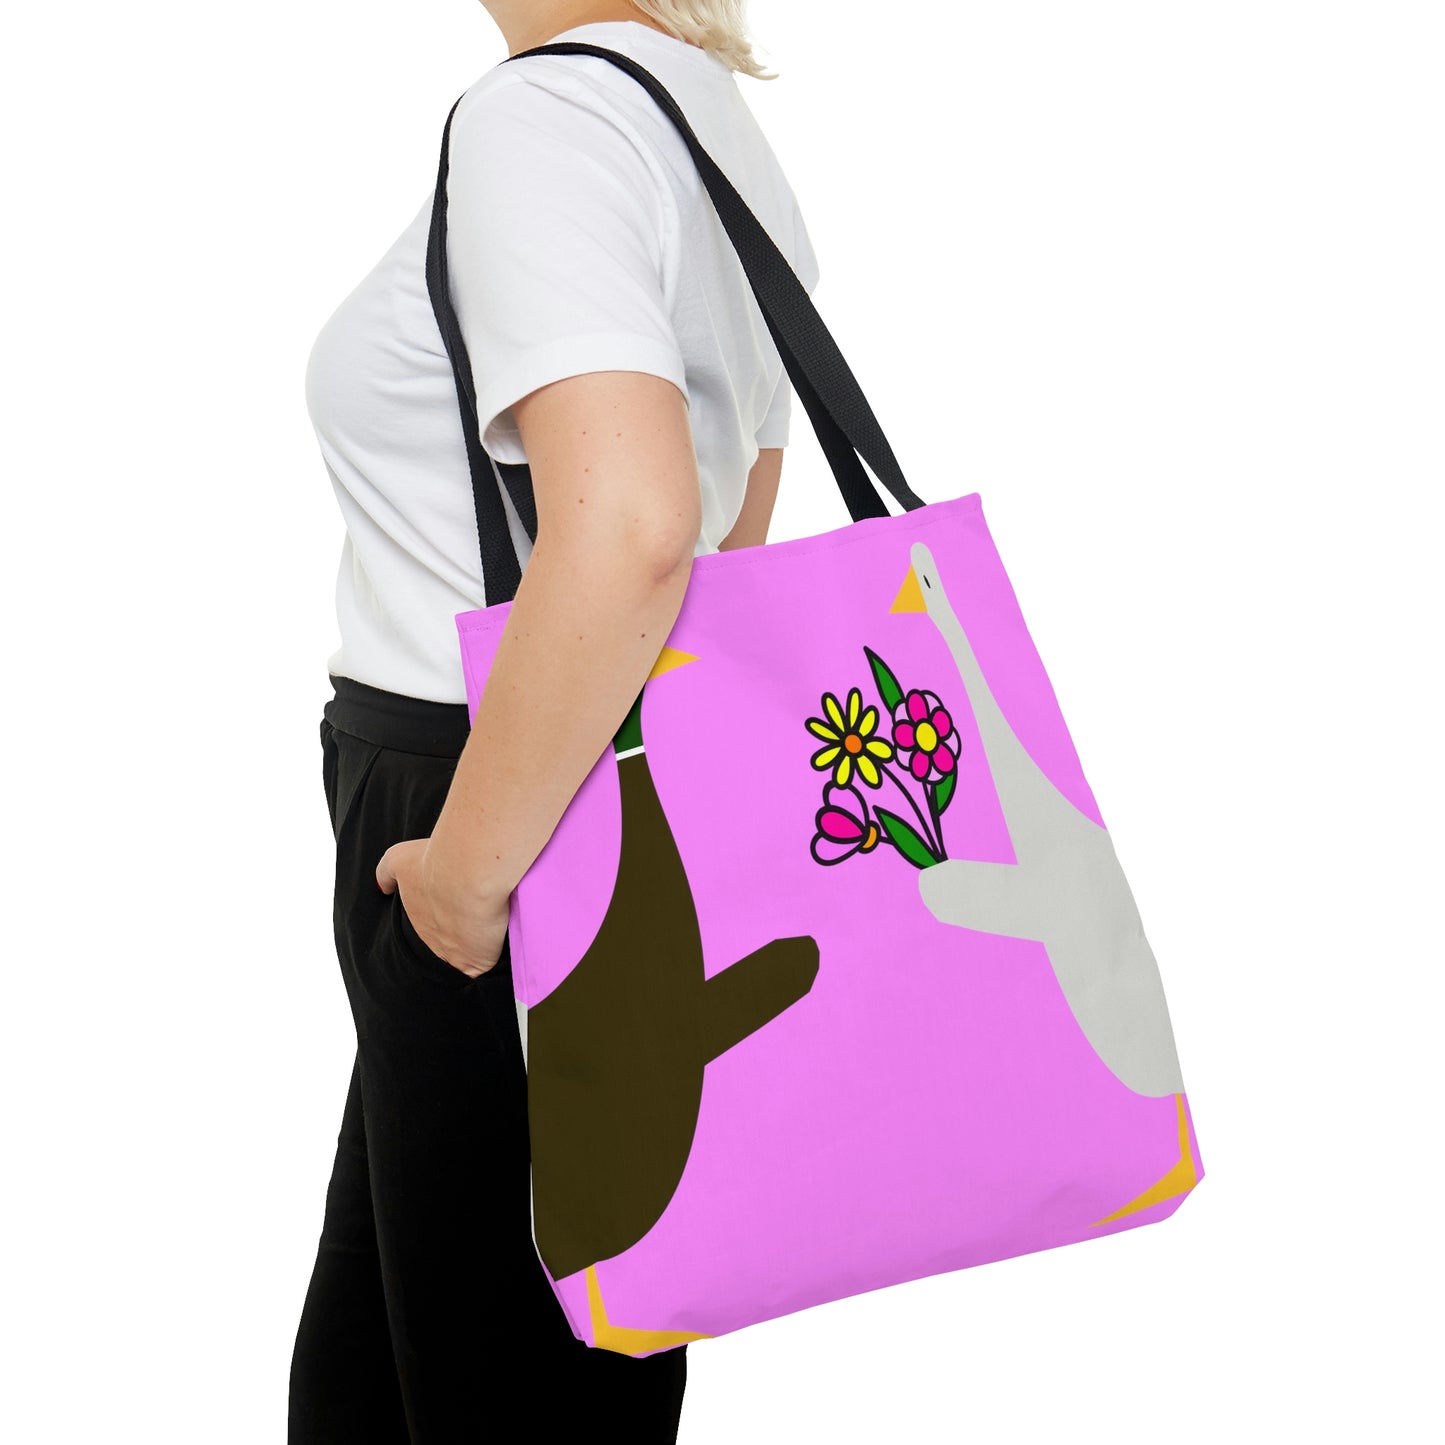 Ducks sharing flowers - Fuschia Pink ff8eff  - Tote Bag